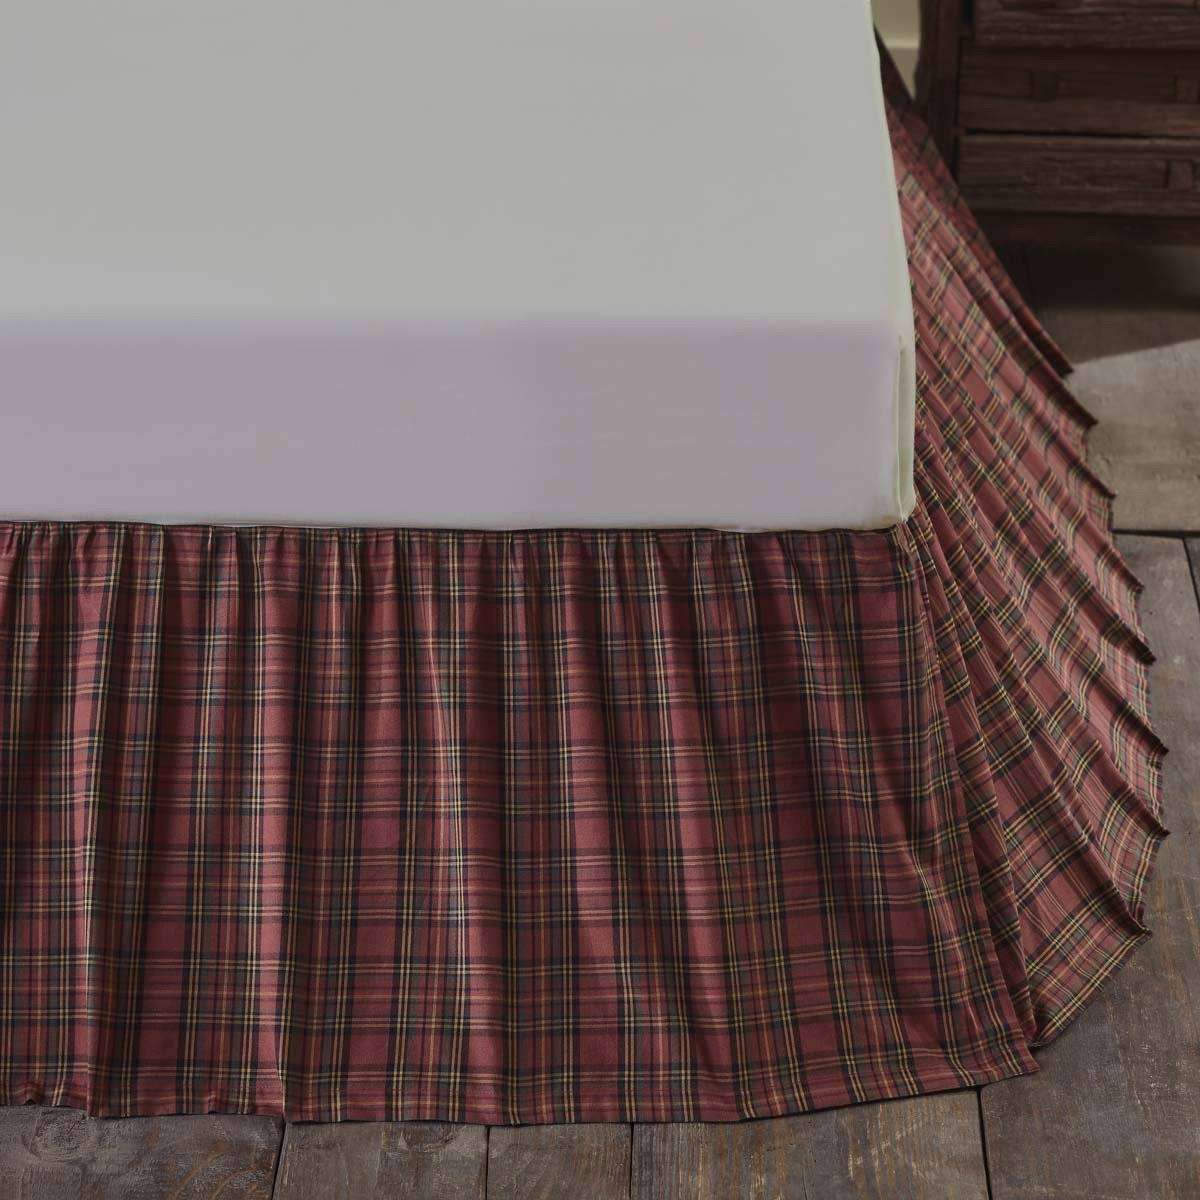 Tartan Red Plaid Bed Skirts VHC Brands - The Fox Decor